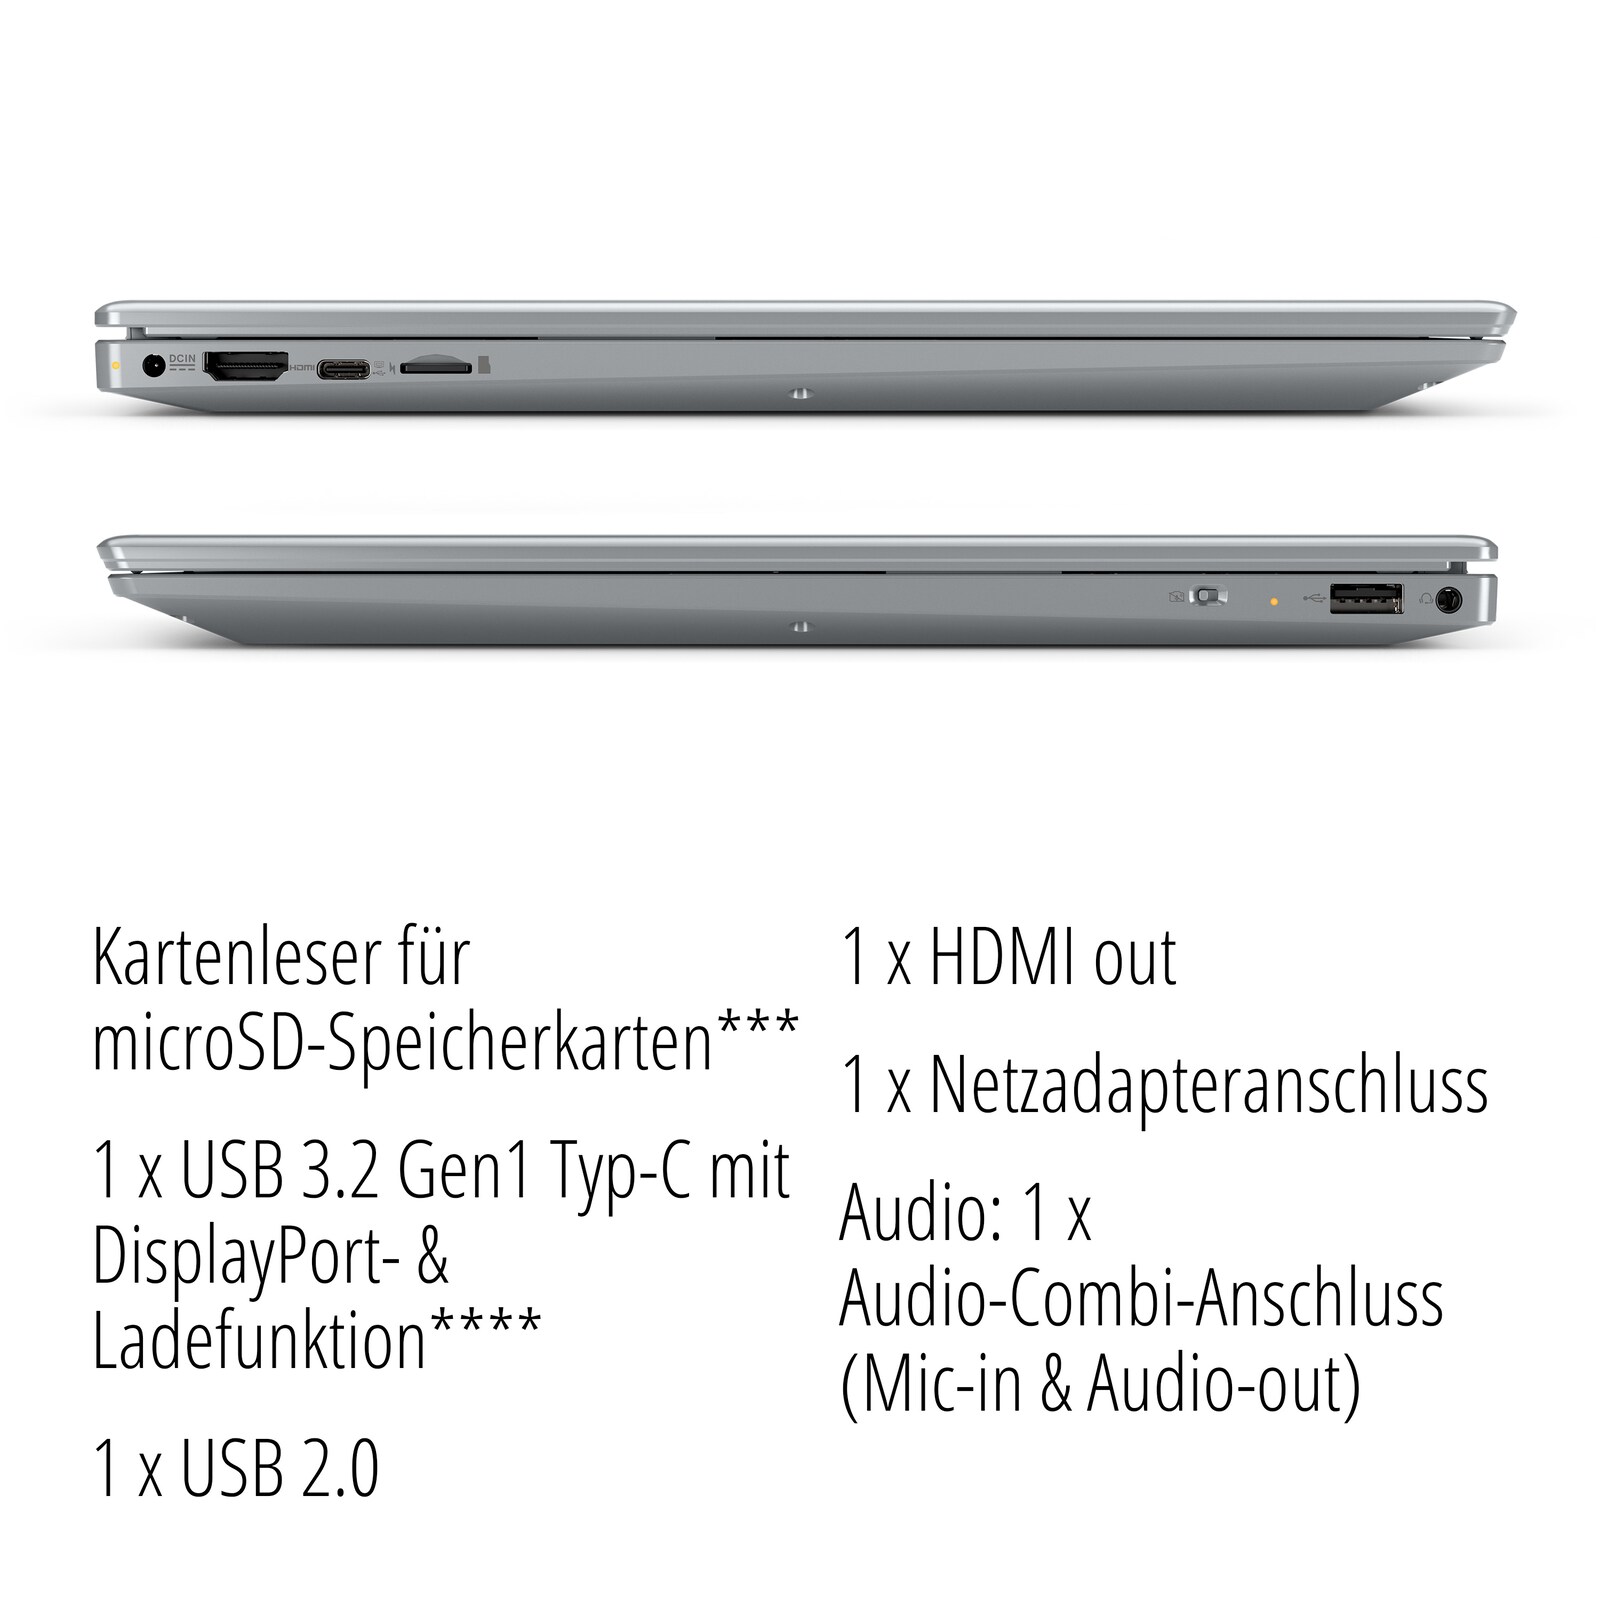 Medion Akoya E15303 15.6 Laptop/Notebook Review 